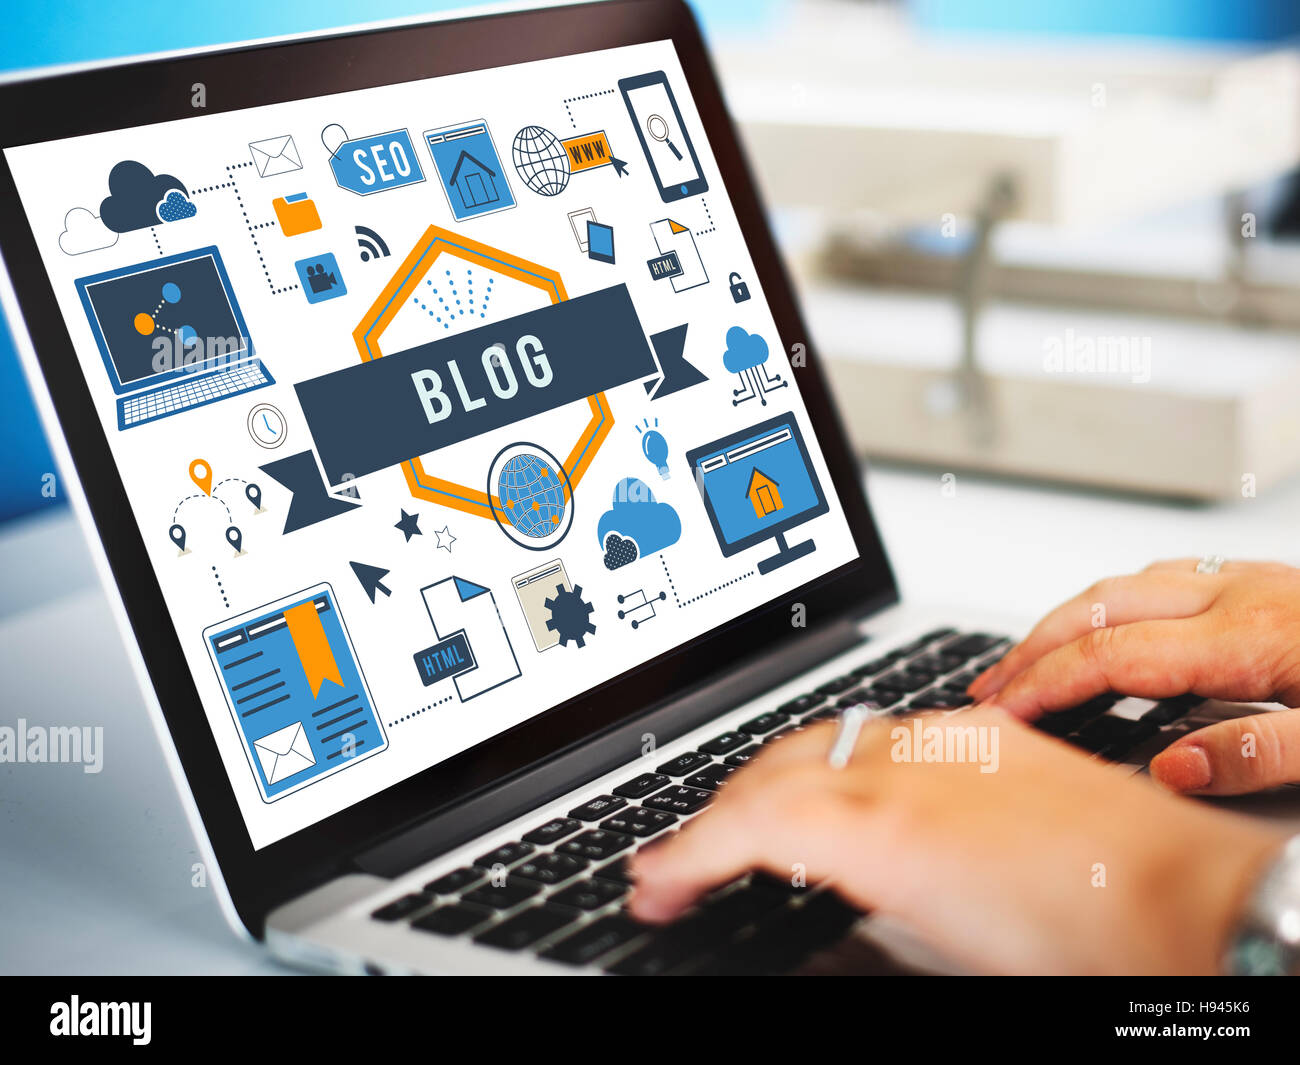 Blog Blogging Website Web Page Concept Stock Photo